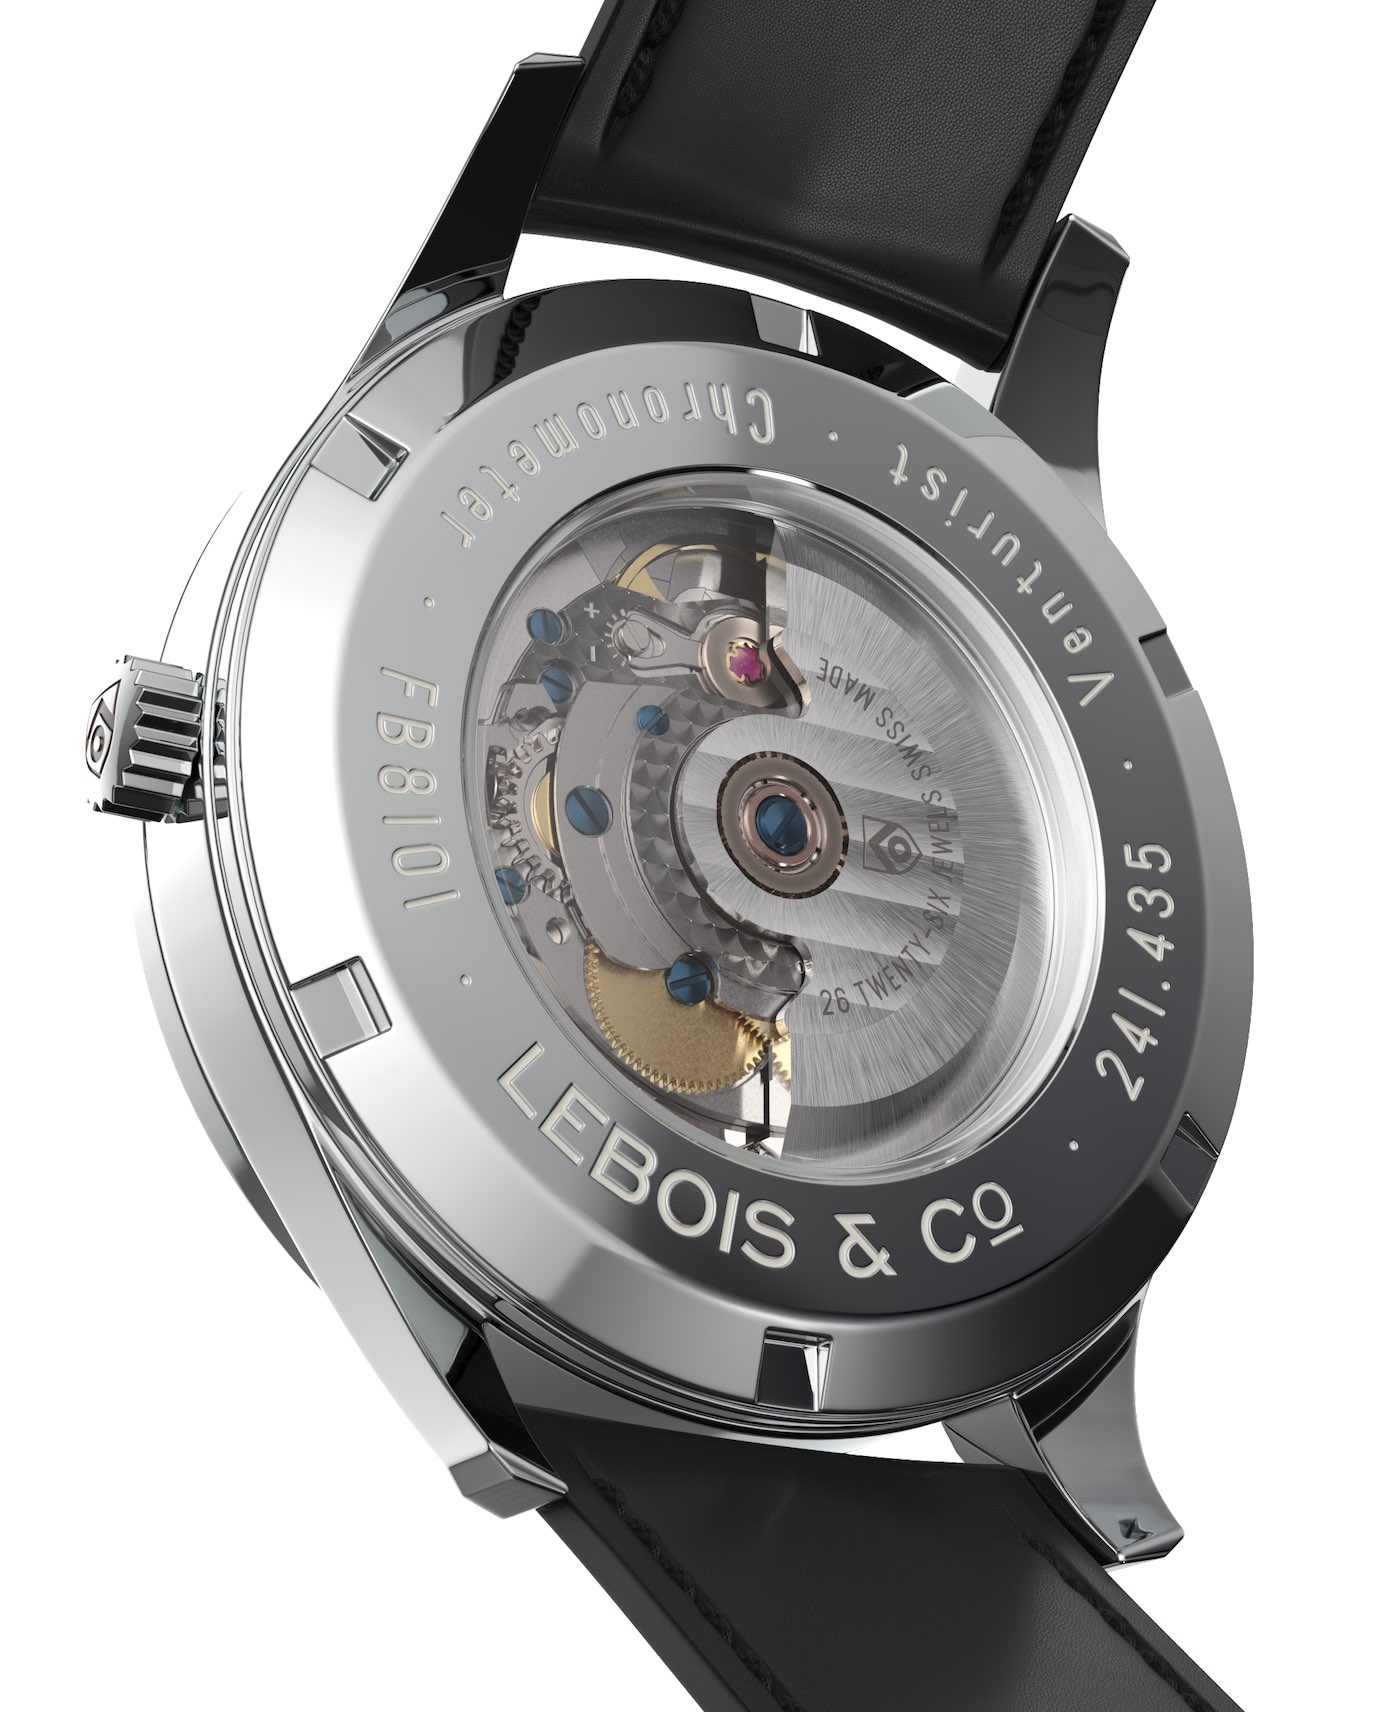 Lebois-and-Co-Venturist-Watch